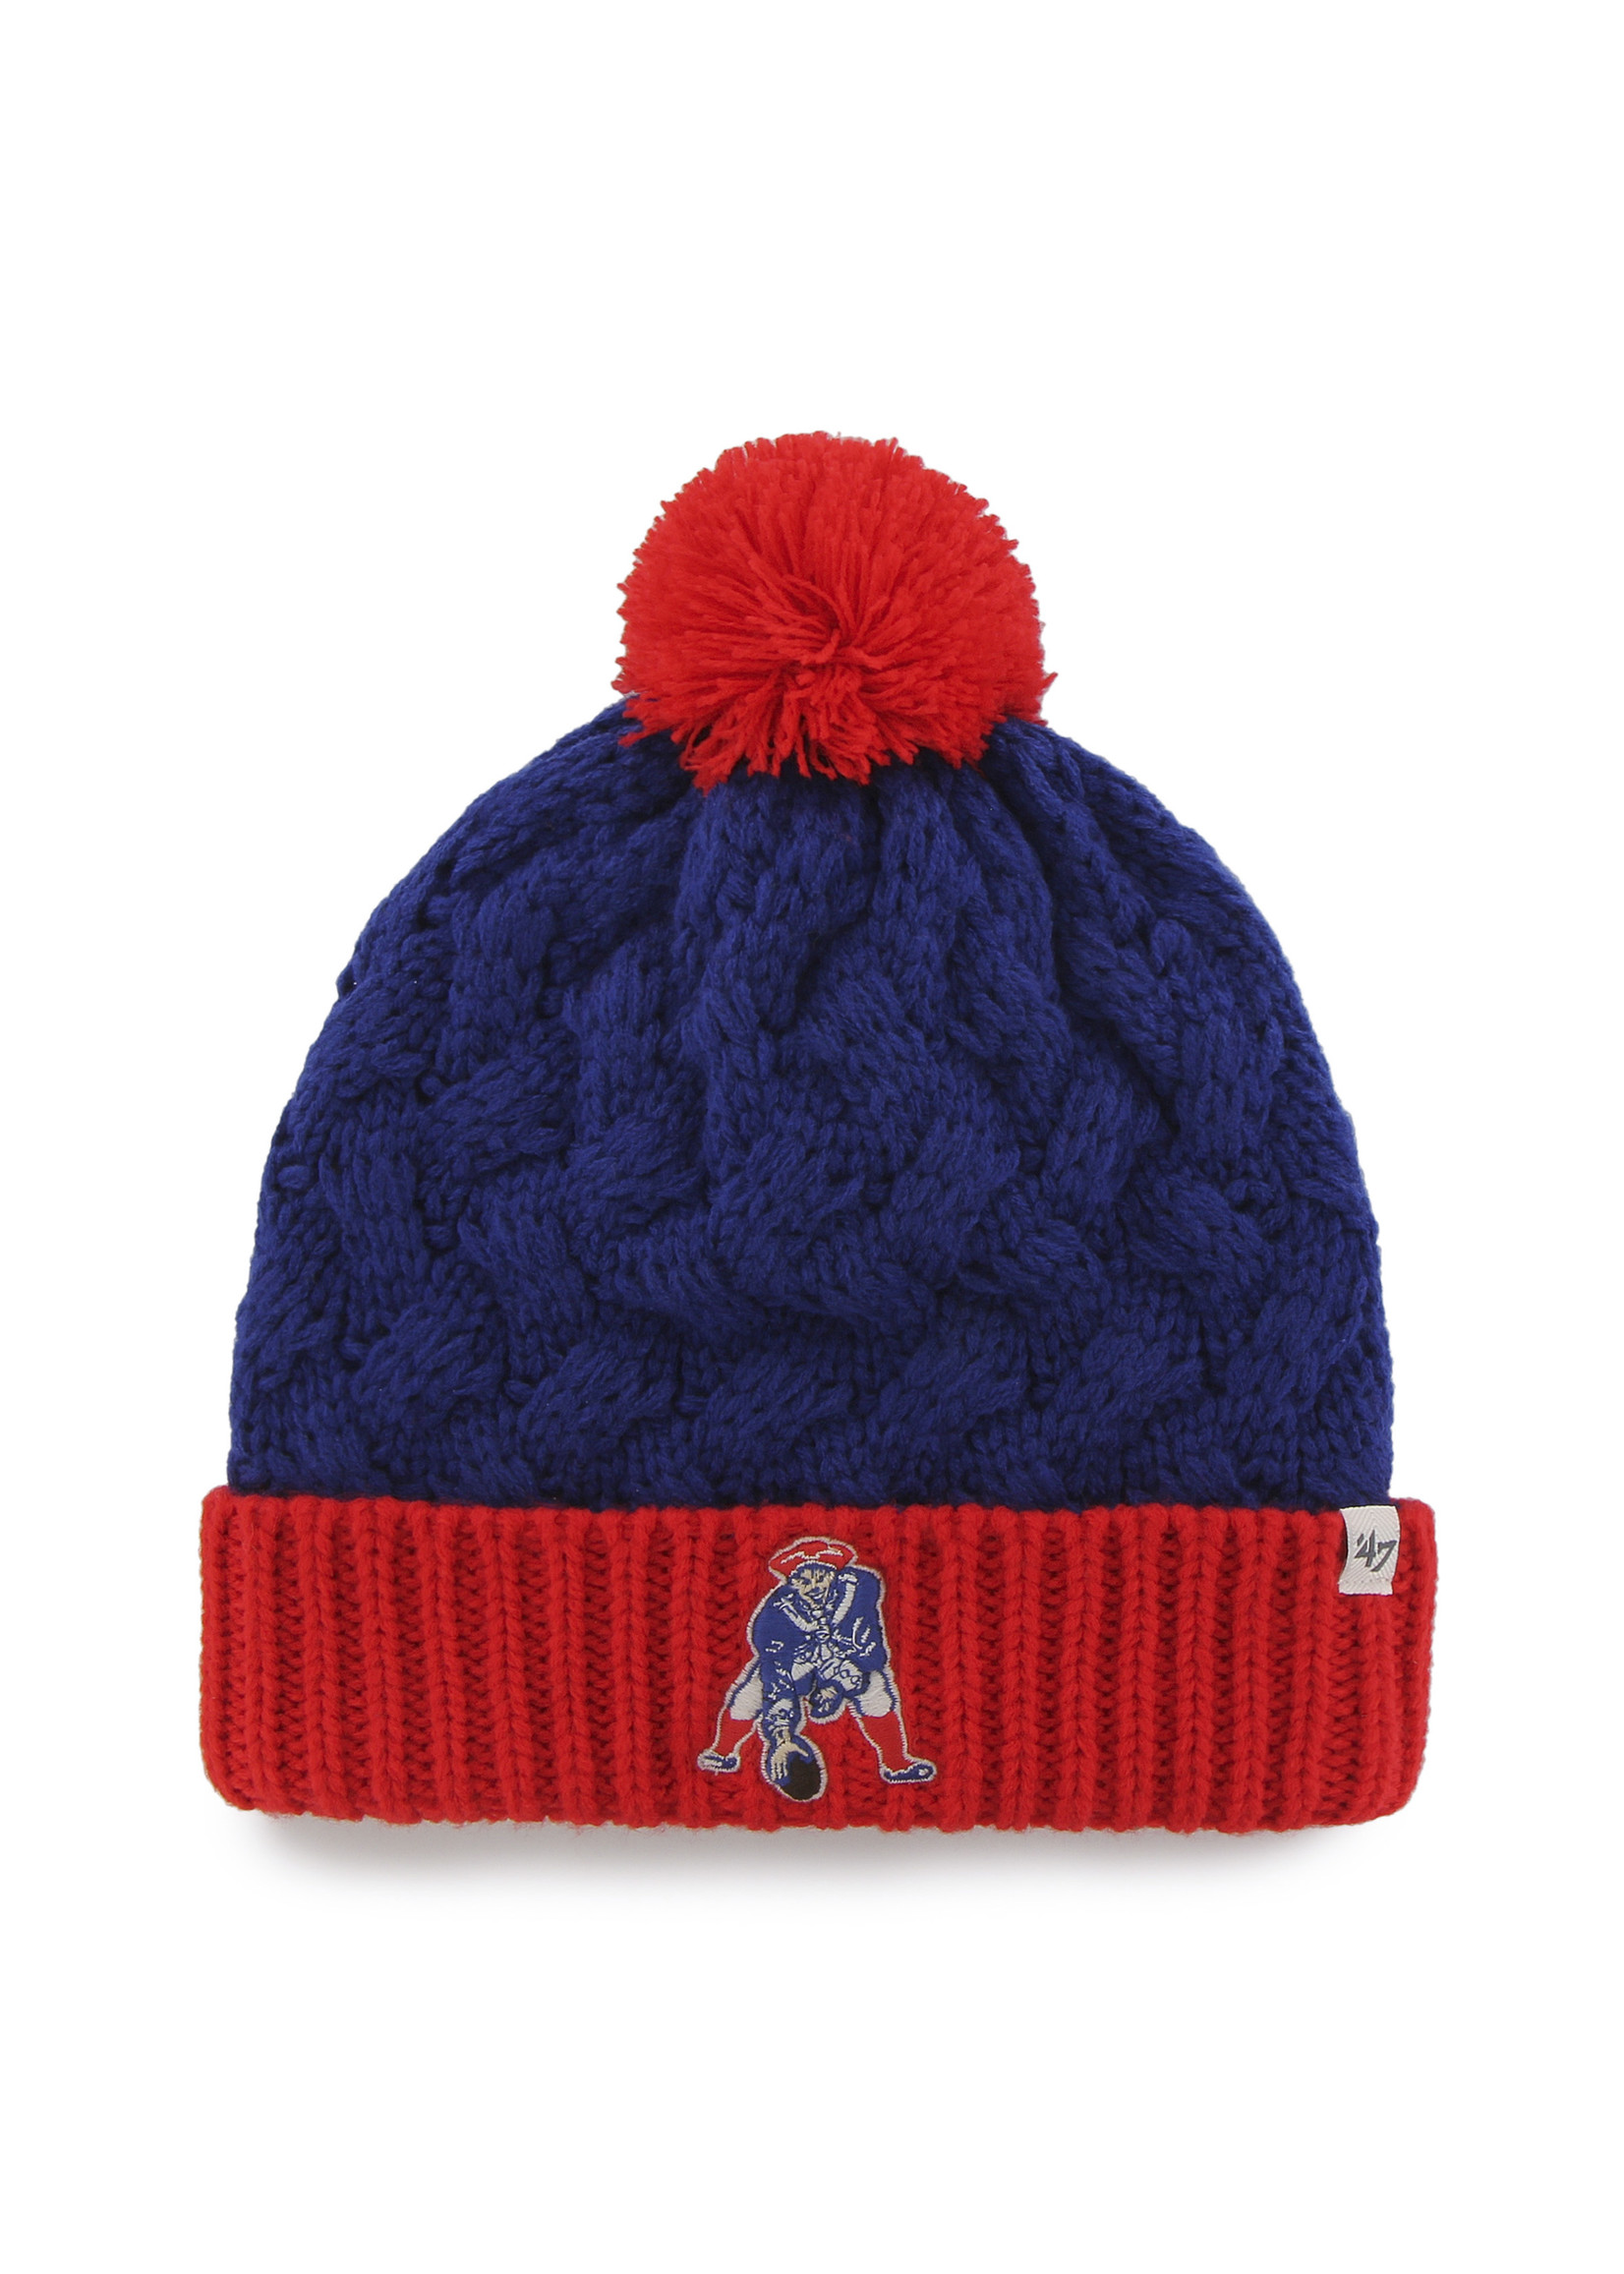 '47 Brand Patriots Women's Winter Hat - Royal/Red